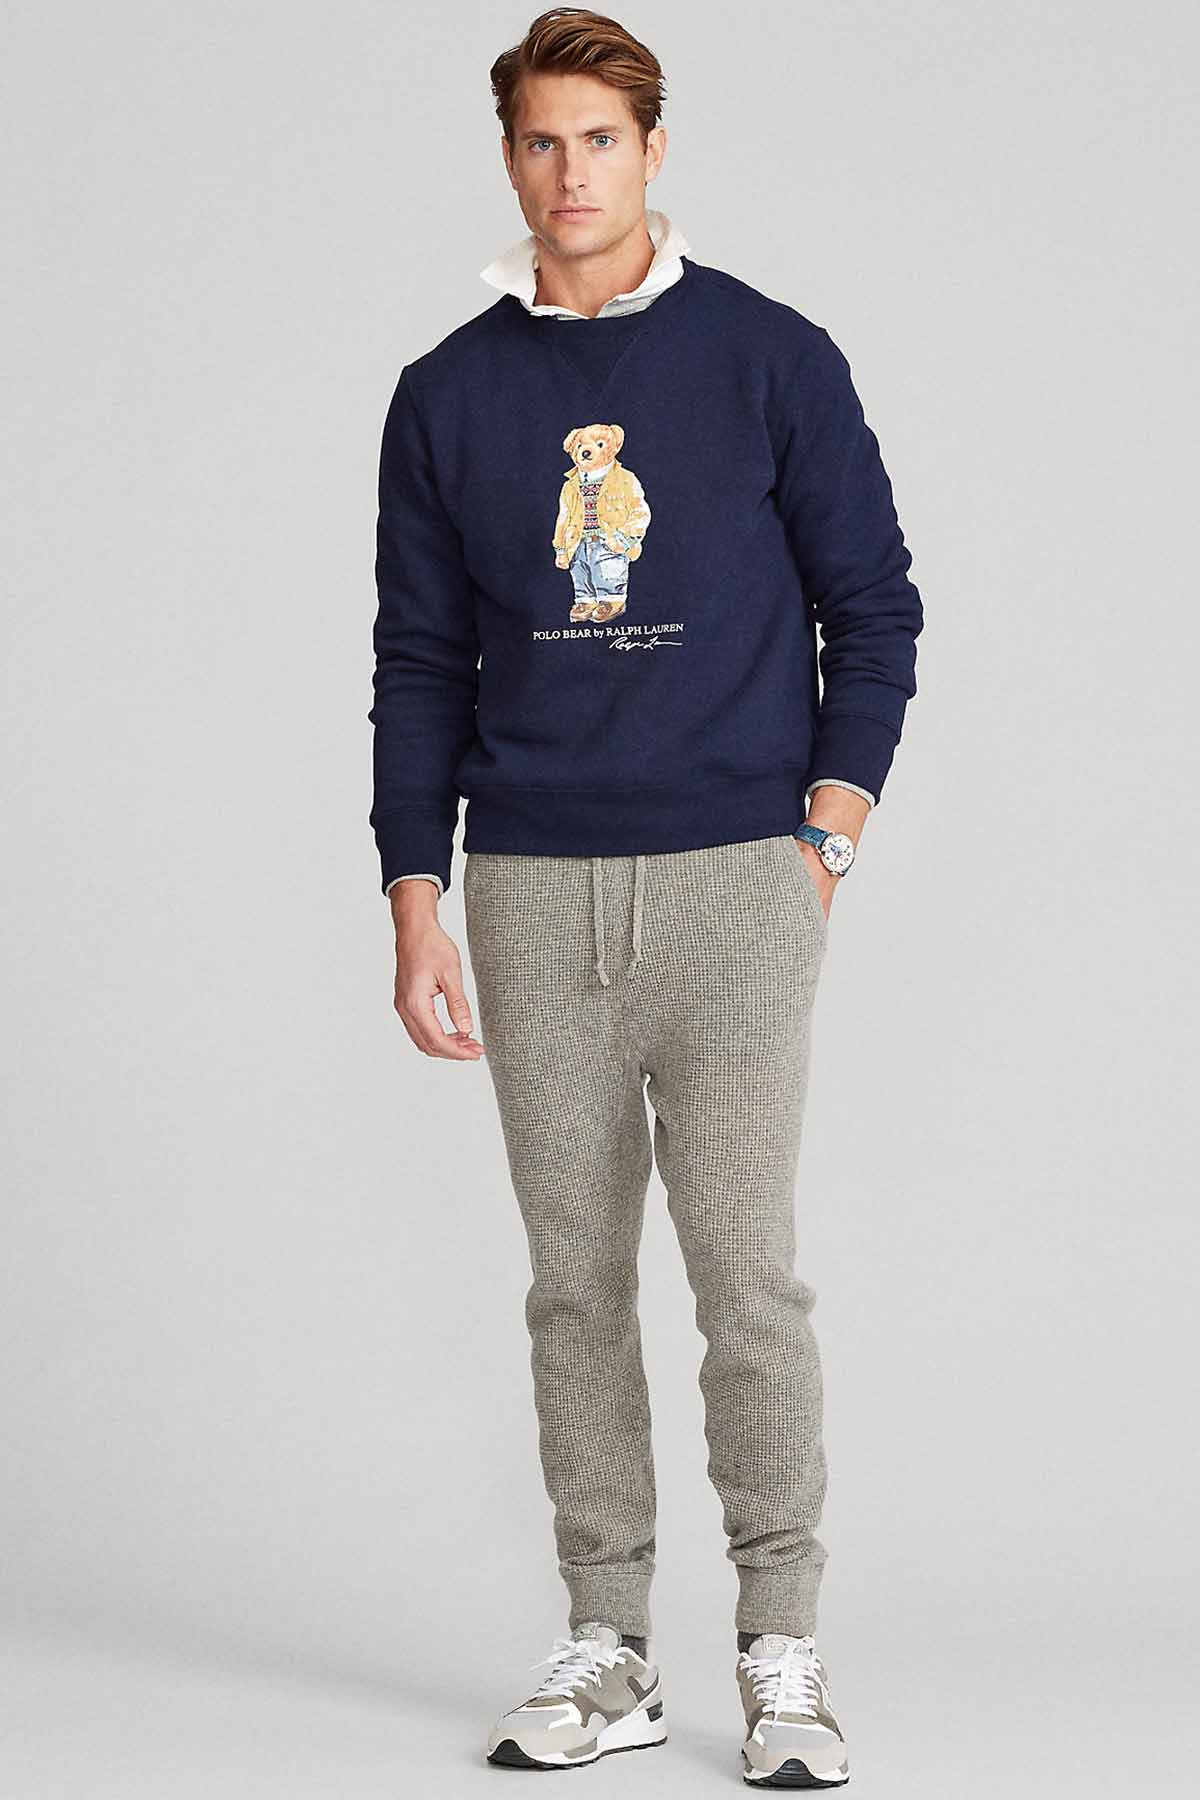 Polo Ralph Lauren Polo Bear Sweatshirt-Libas Trendy Fashion Store